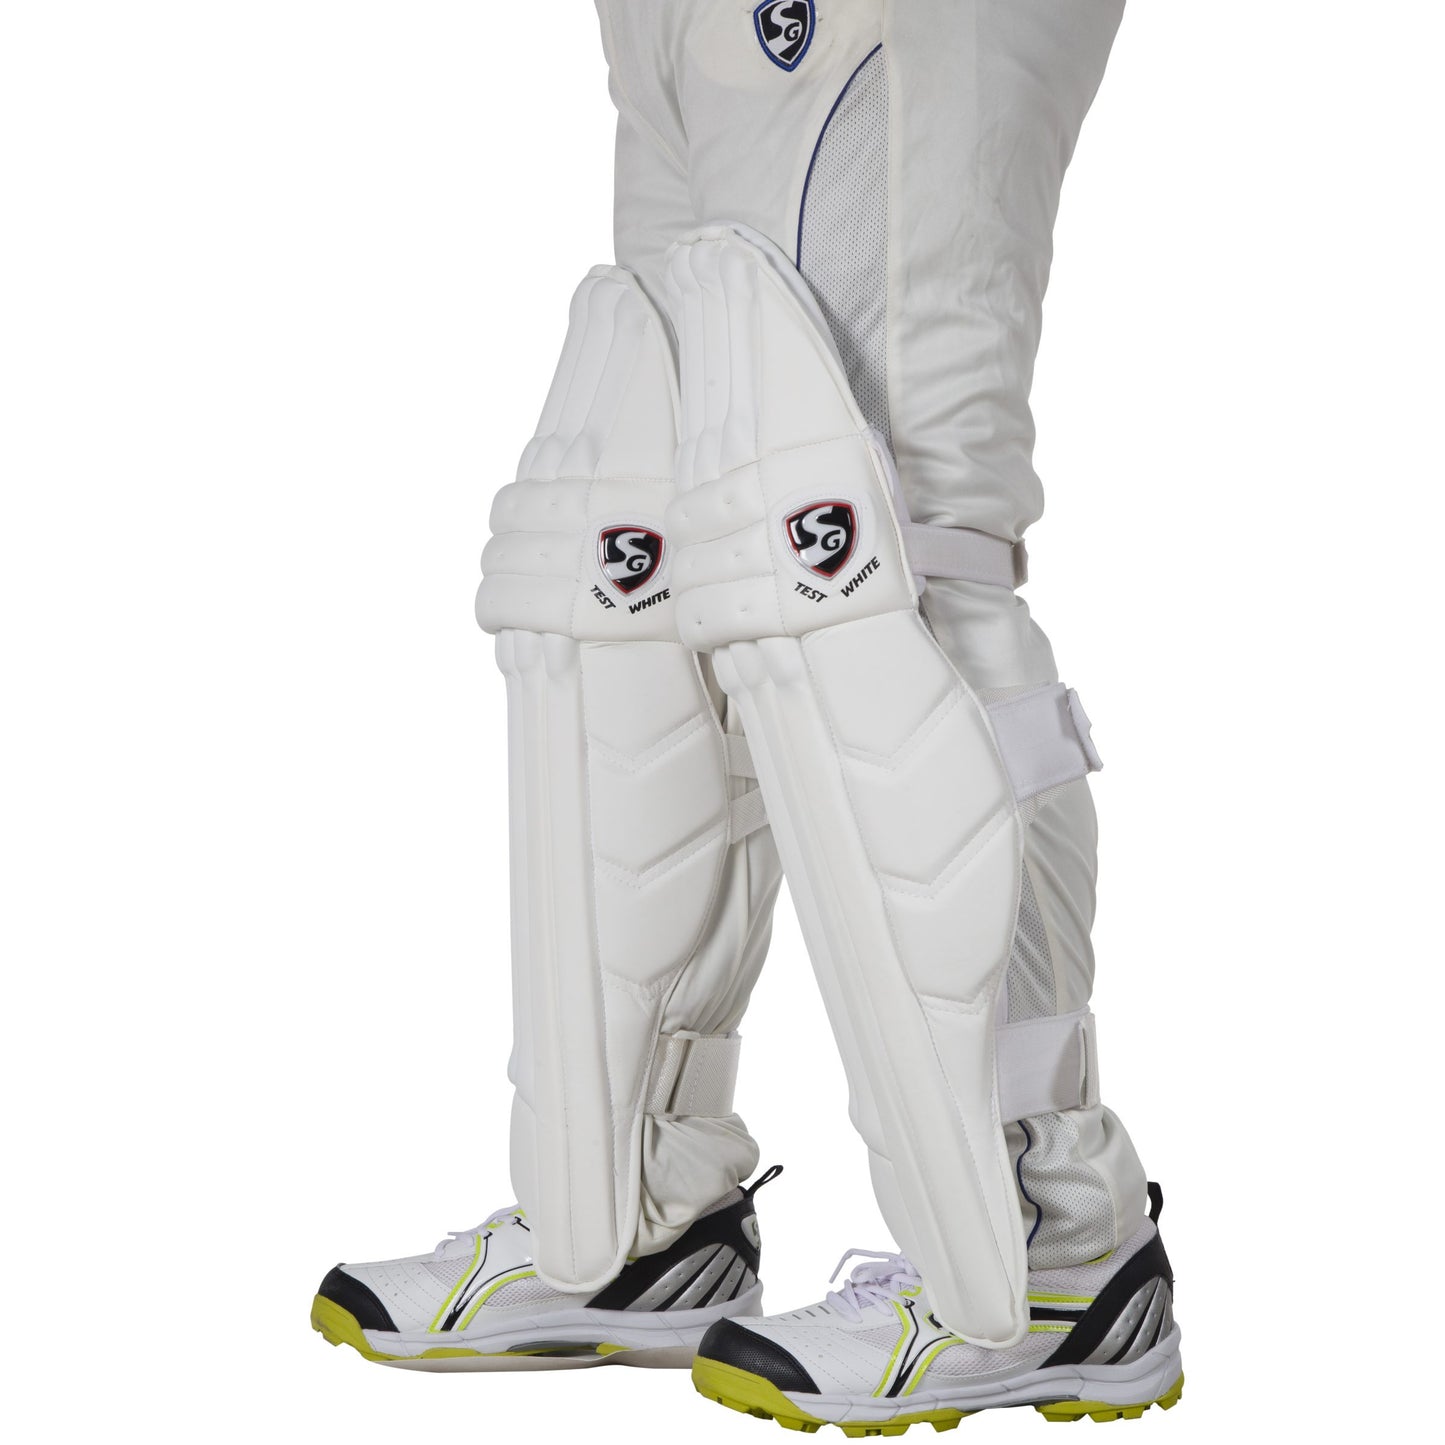 SG Test White Cricket Batting Legguard (Batting Pad) - Best Price online Prokicksports.com